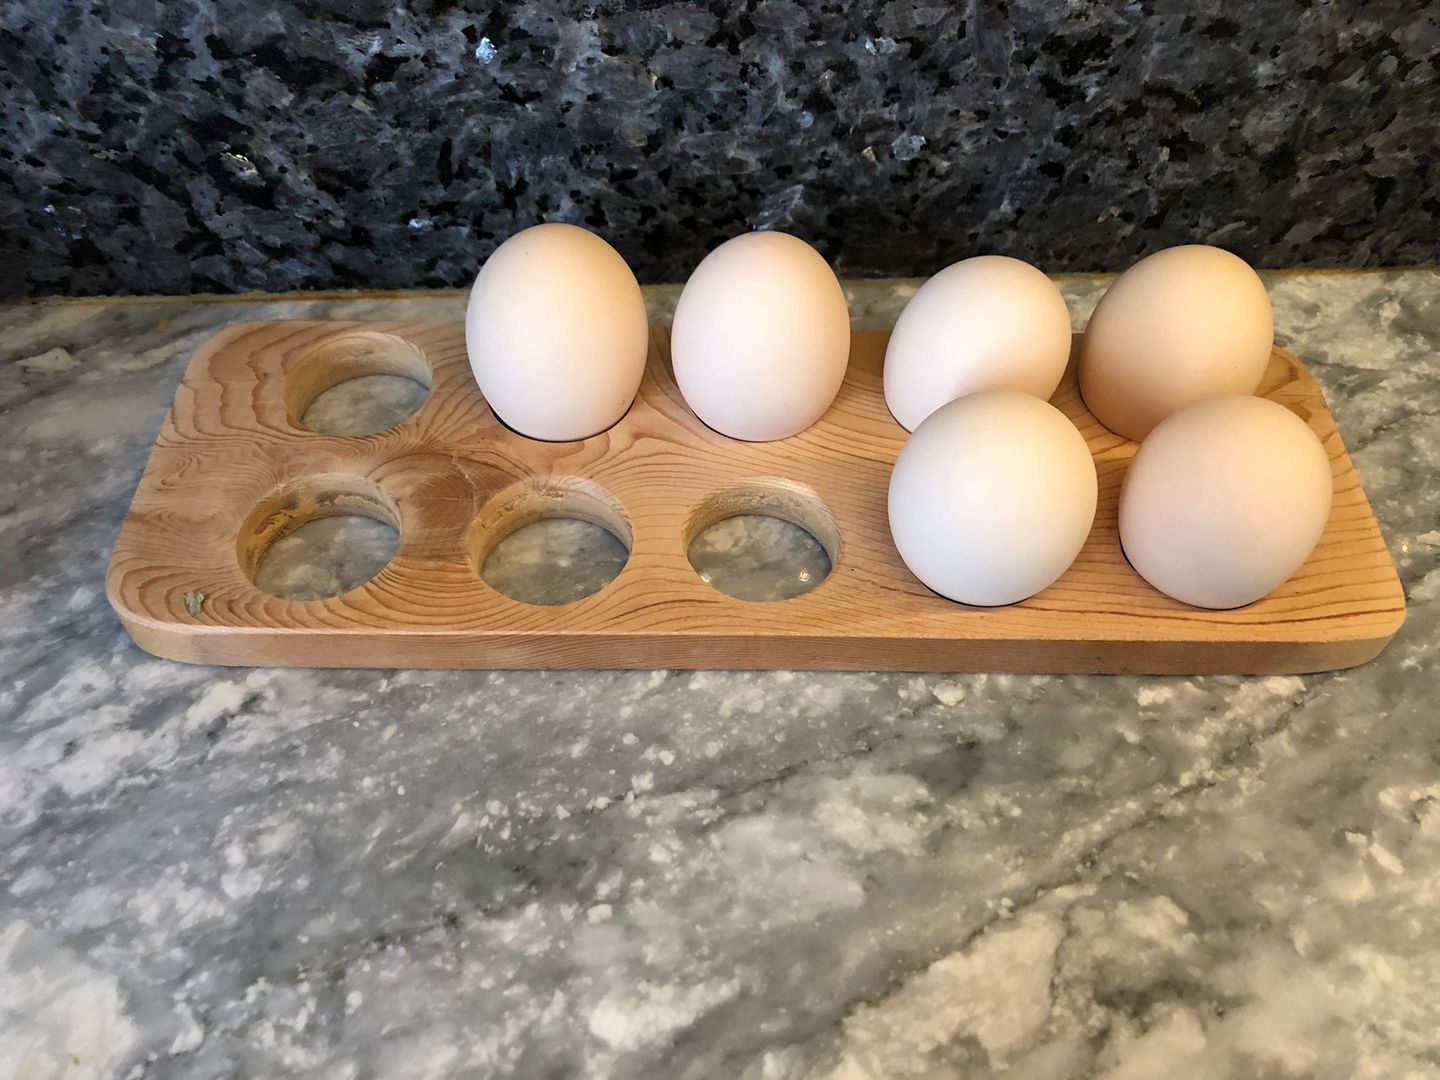 How to make a wooden egg holder - The Vanderveen House